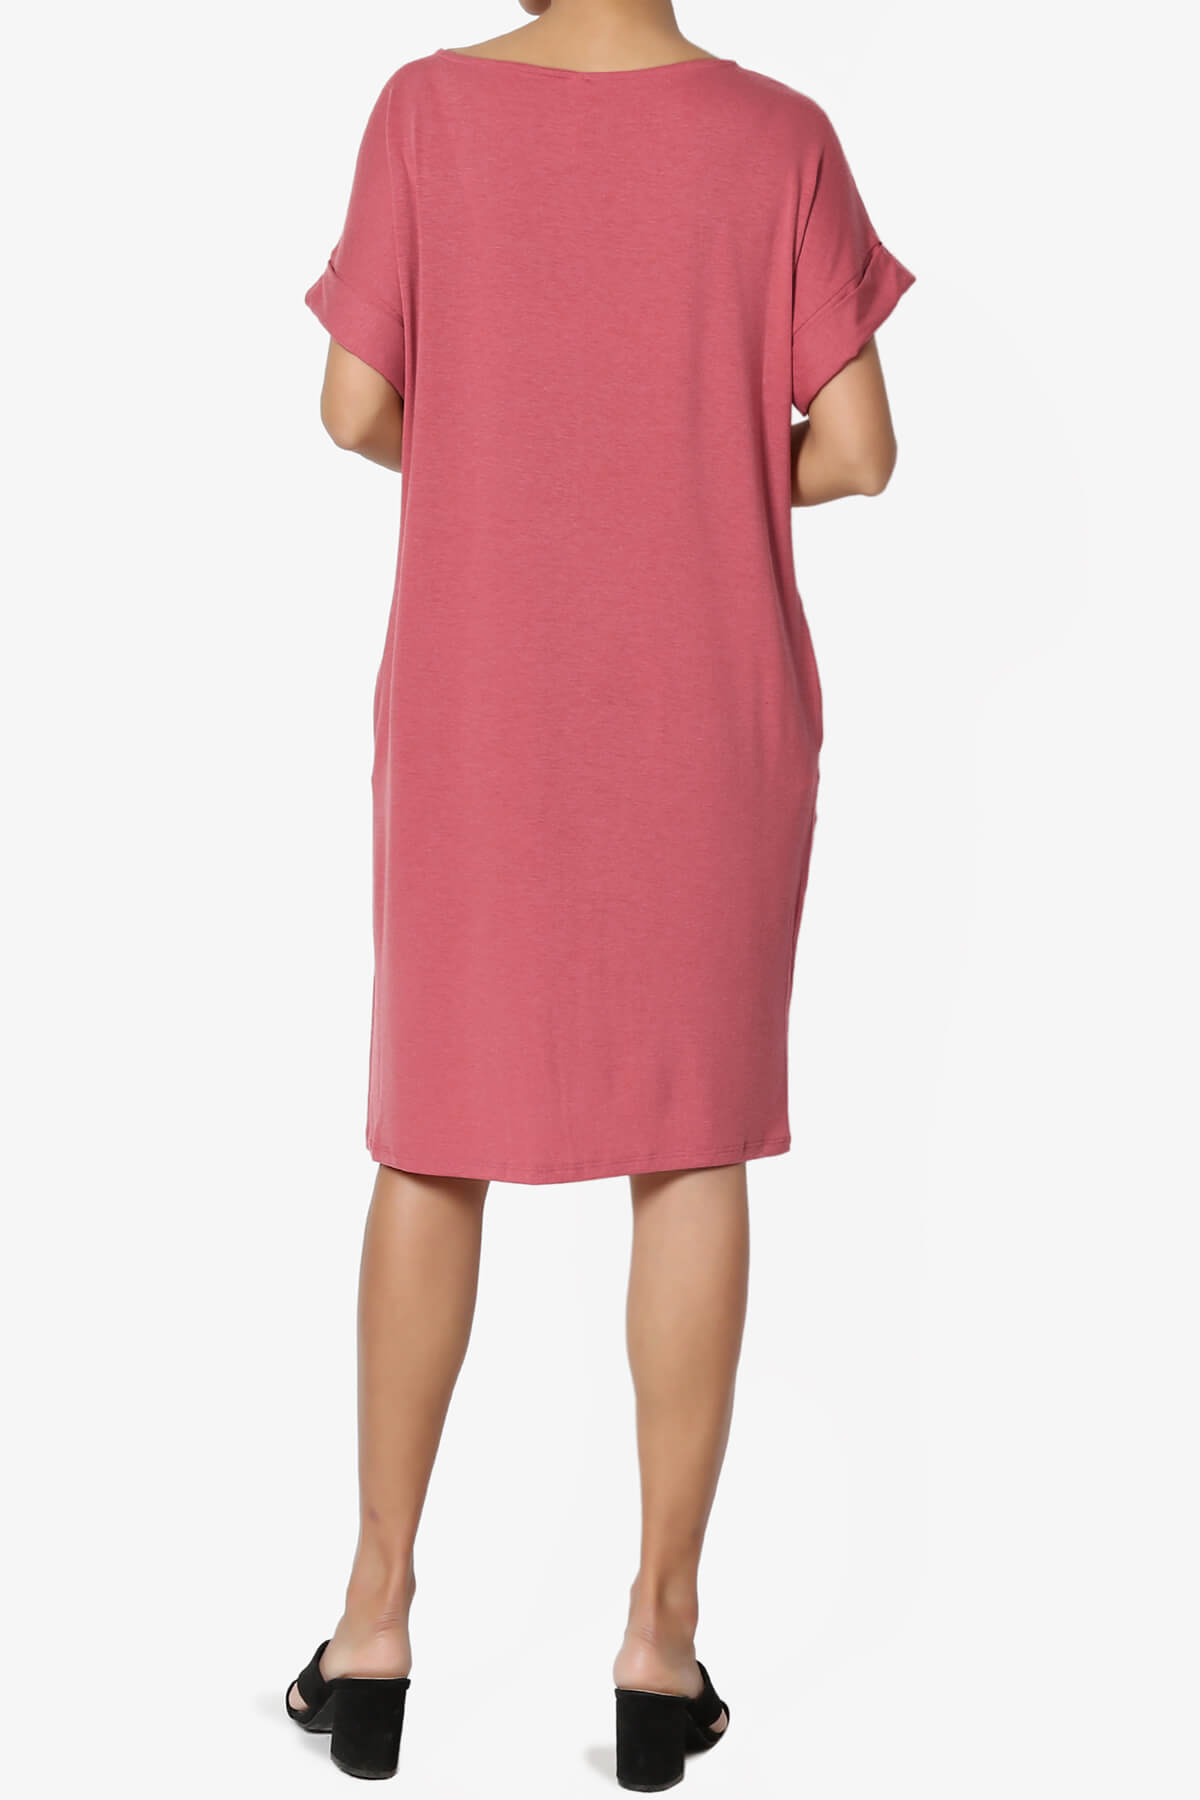 Janie Rolled Short Sleeve Round Neck Dress ROSE_2